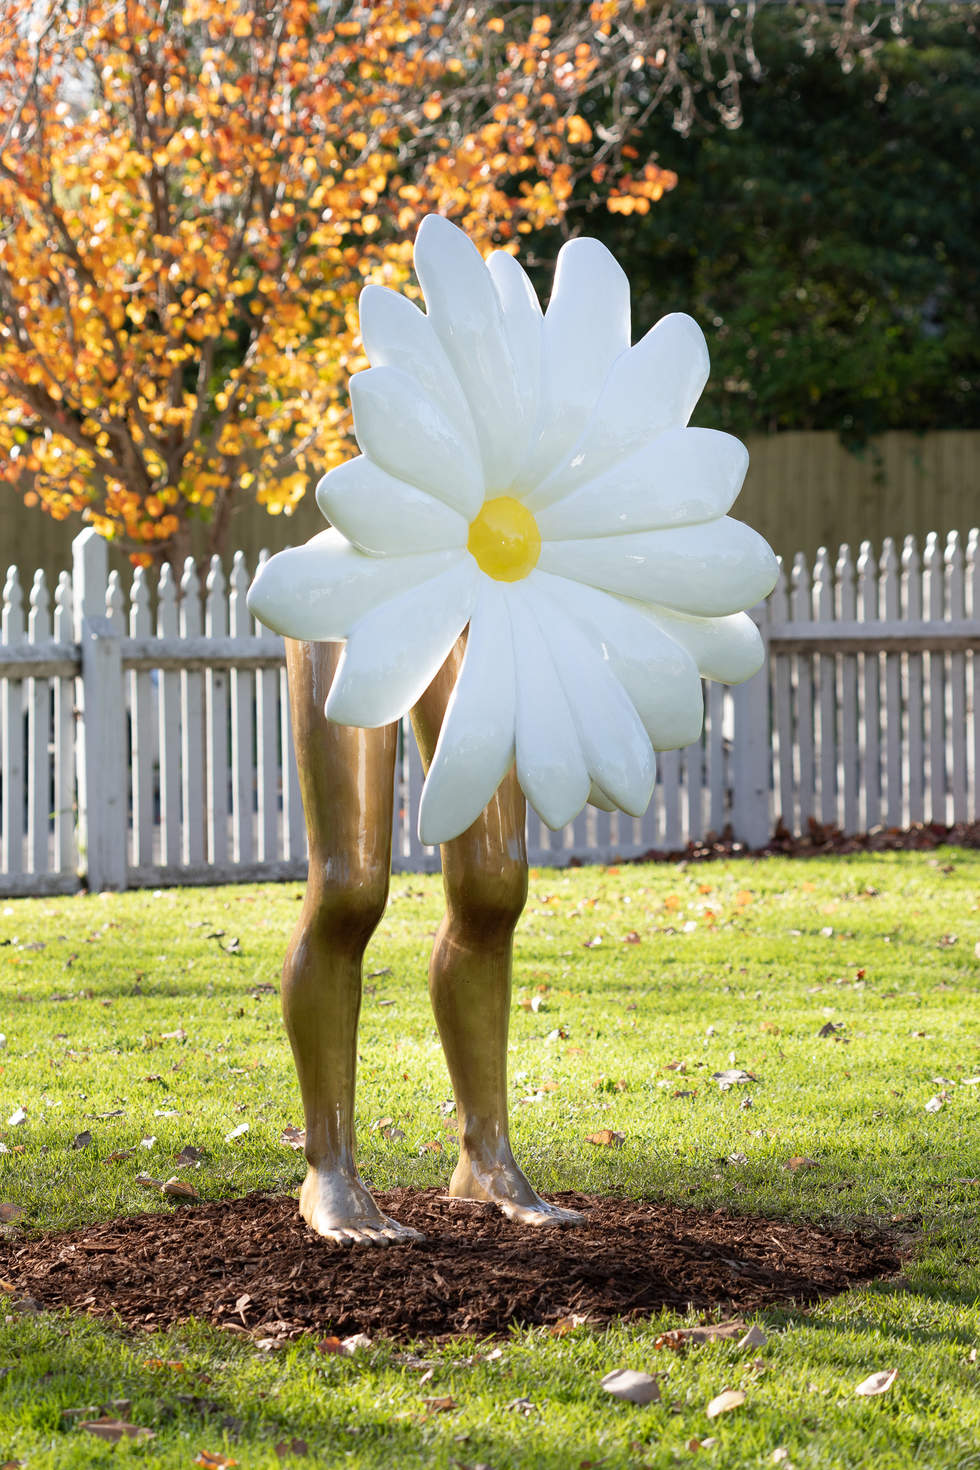 Bronze sculpture of daisy attached to human legs in Billilla gardens